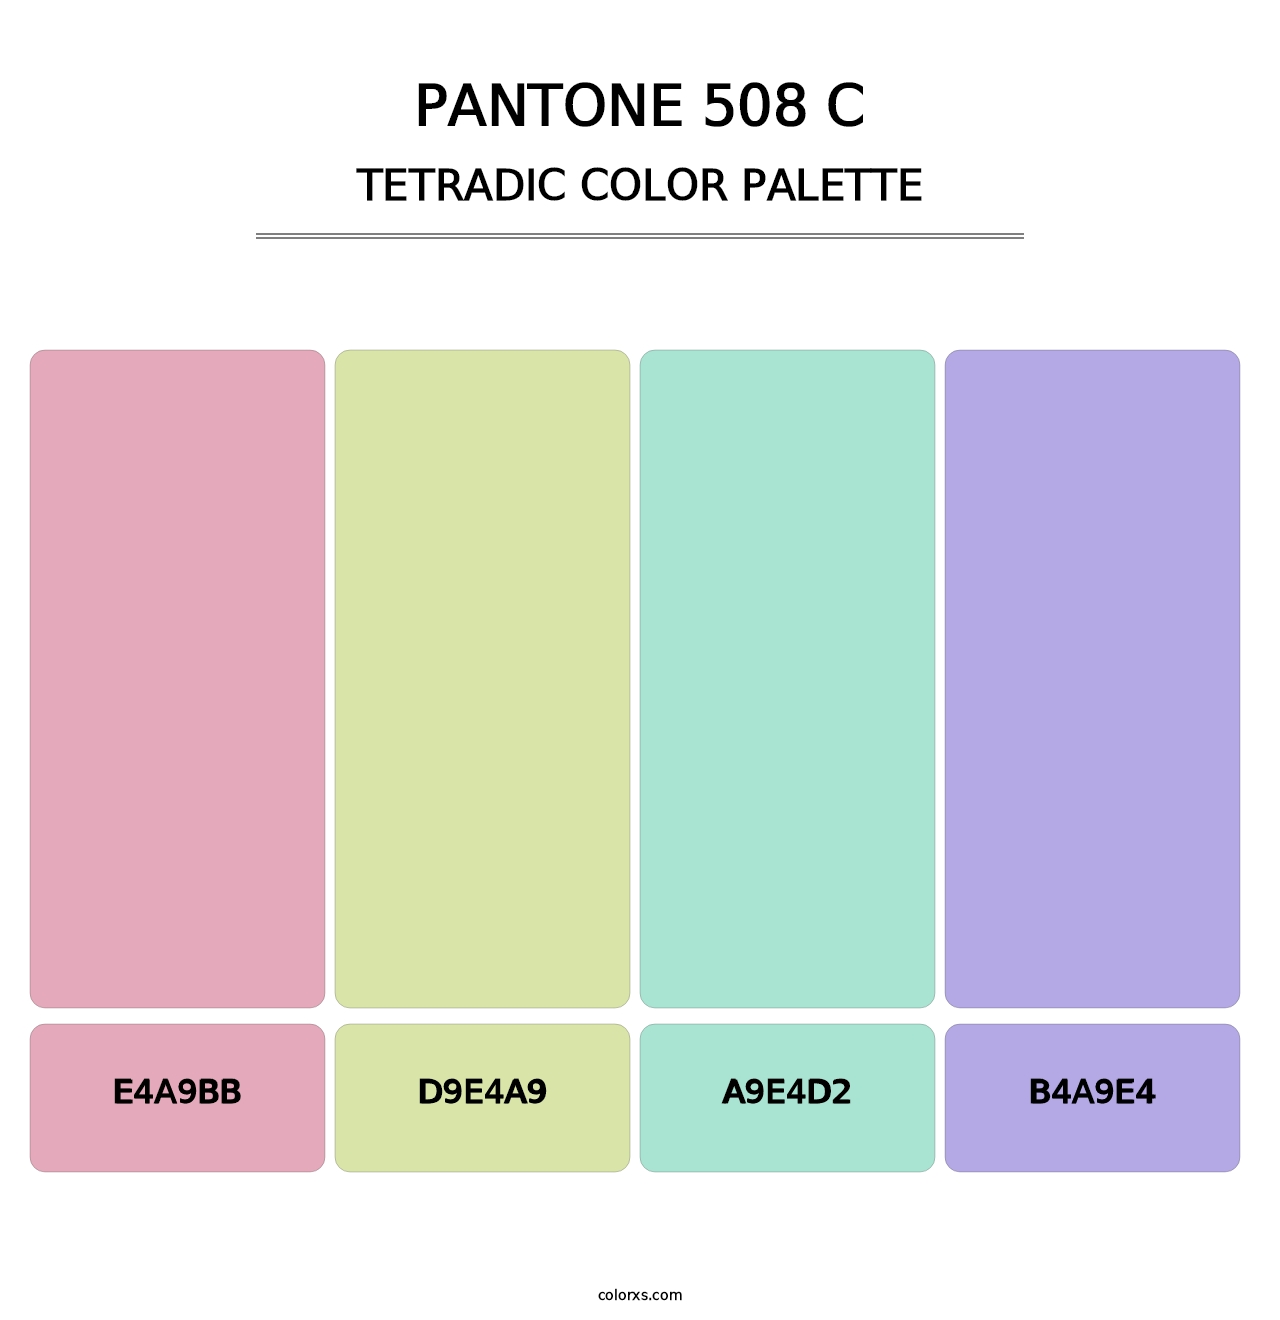 PANTONE 508 C - Tetradic Color Palette